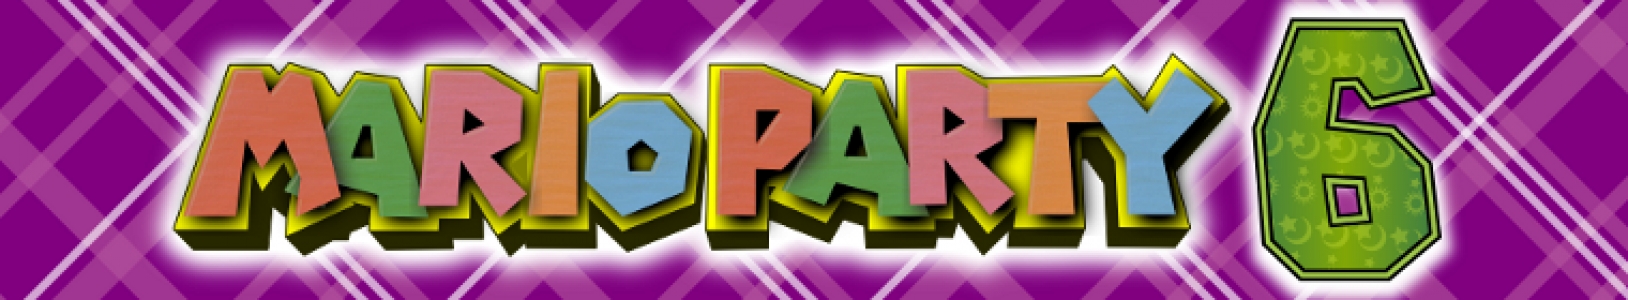 Mario Party 6 banner